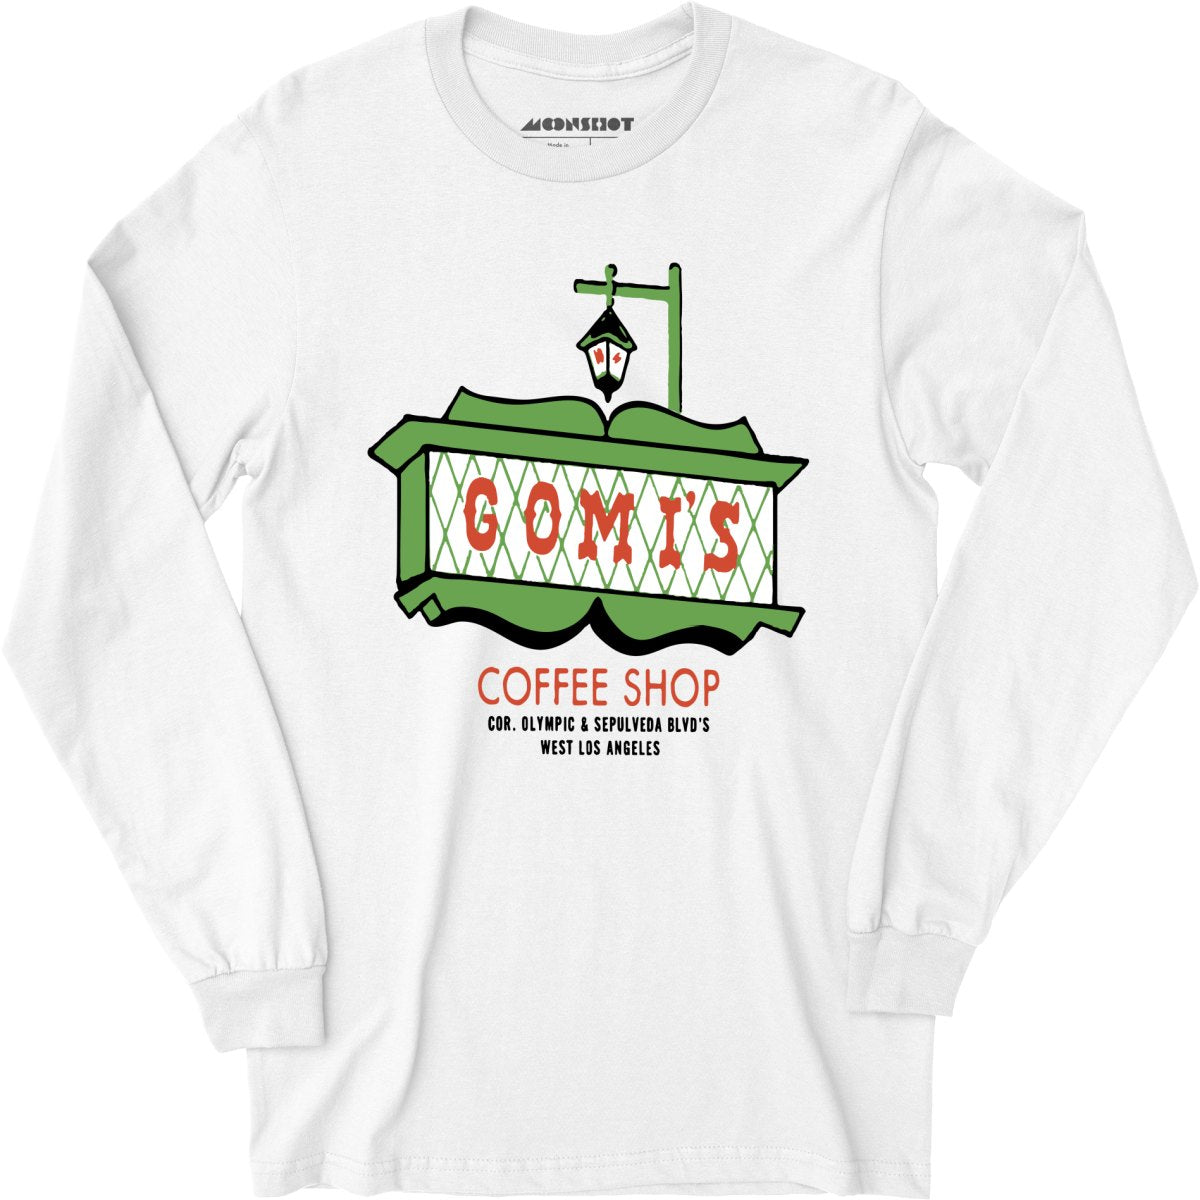 Gomi's Coffee Shop - Los Angeles, CA - Vintage Restaurant - Long Sleeve T-Shirt